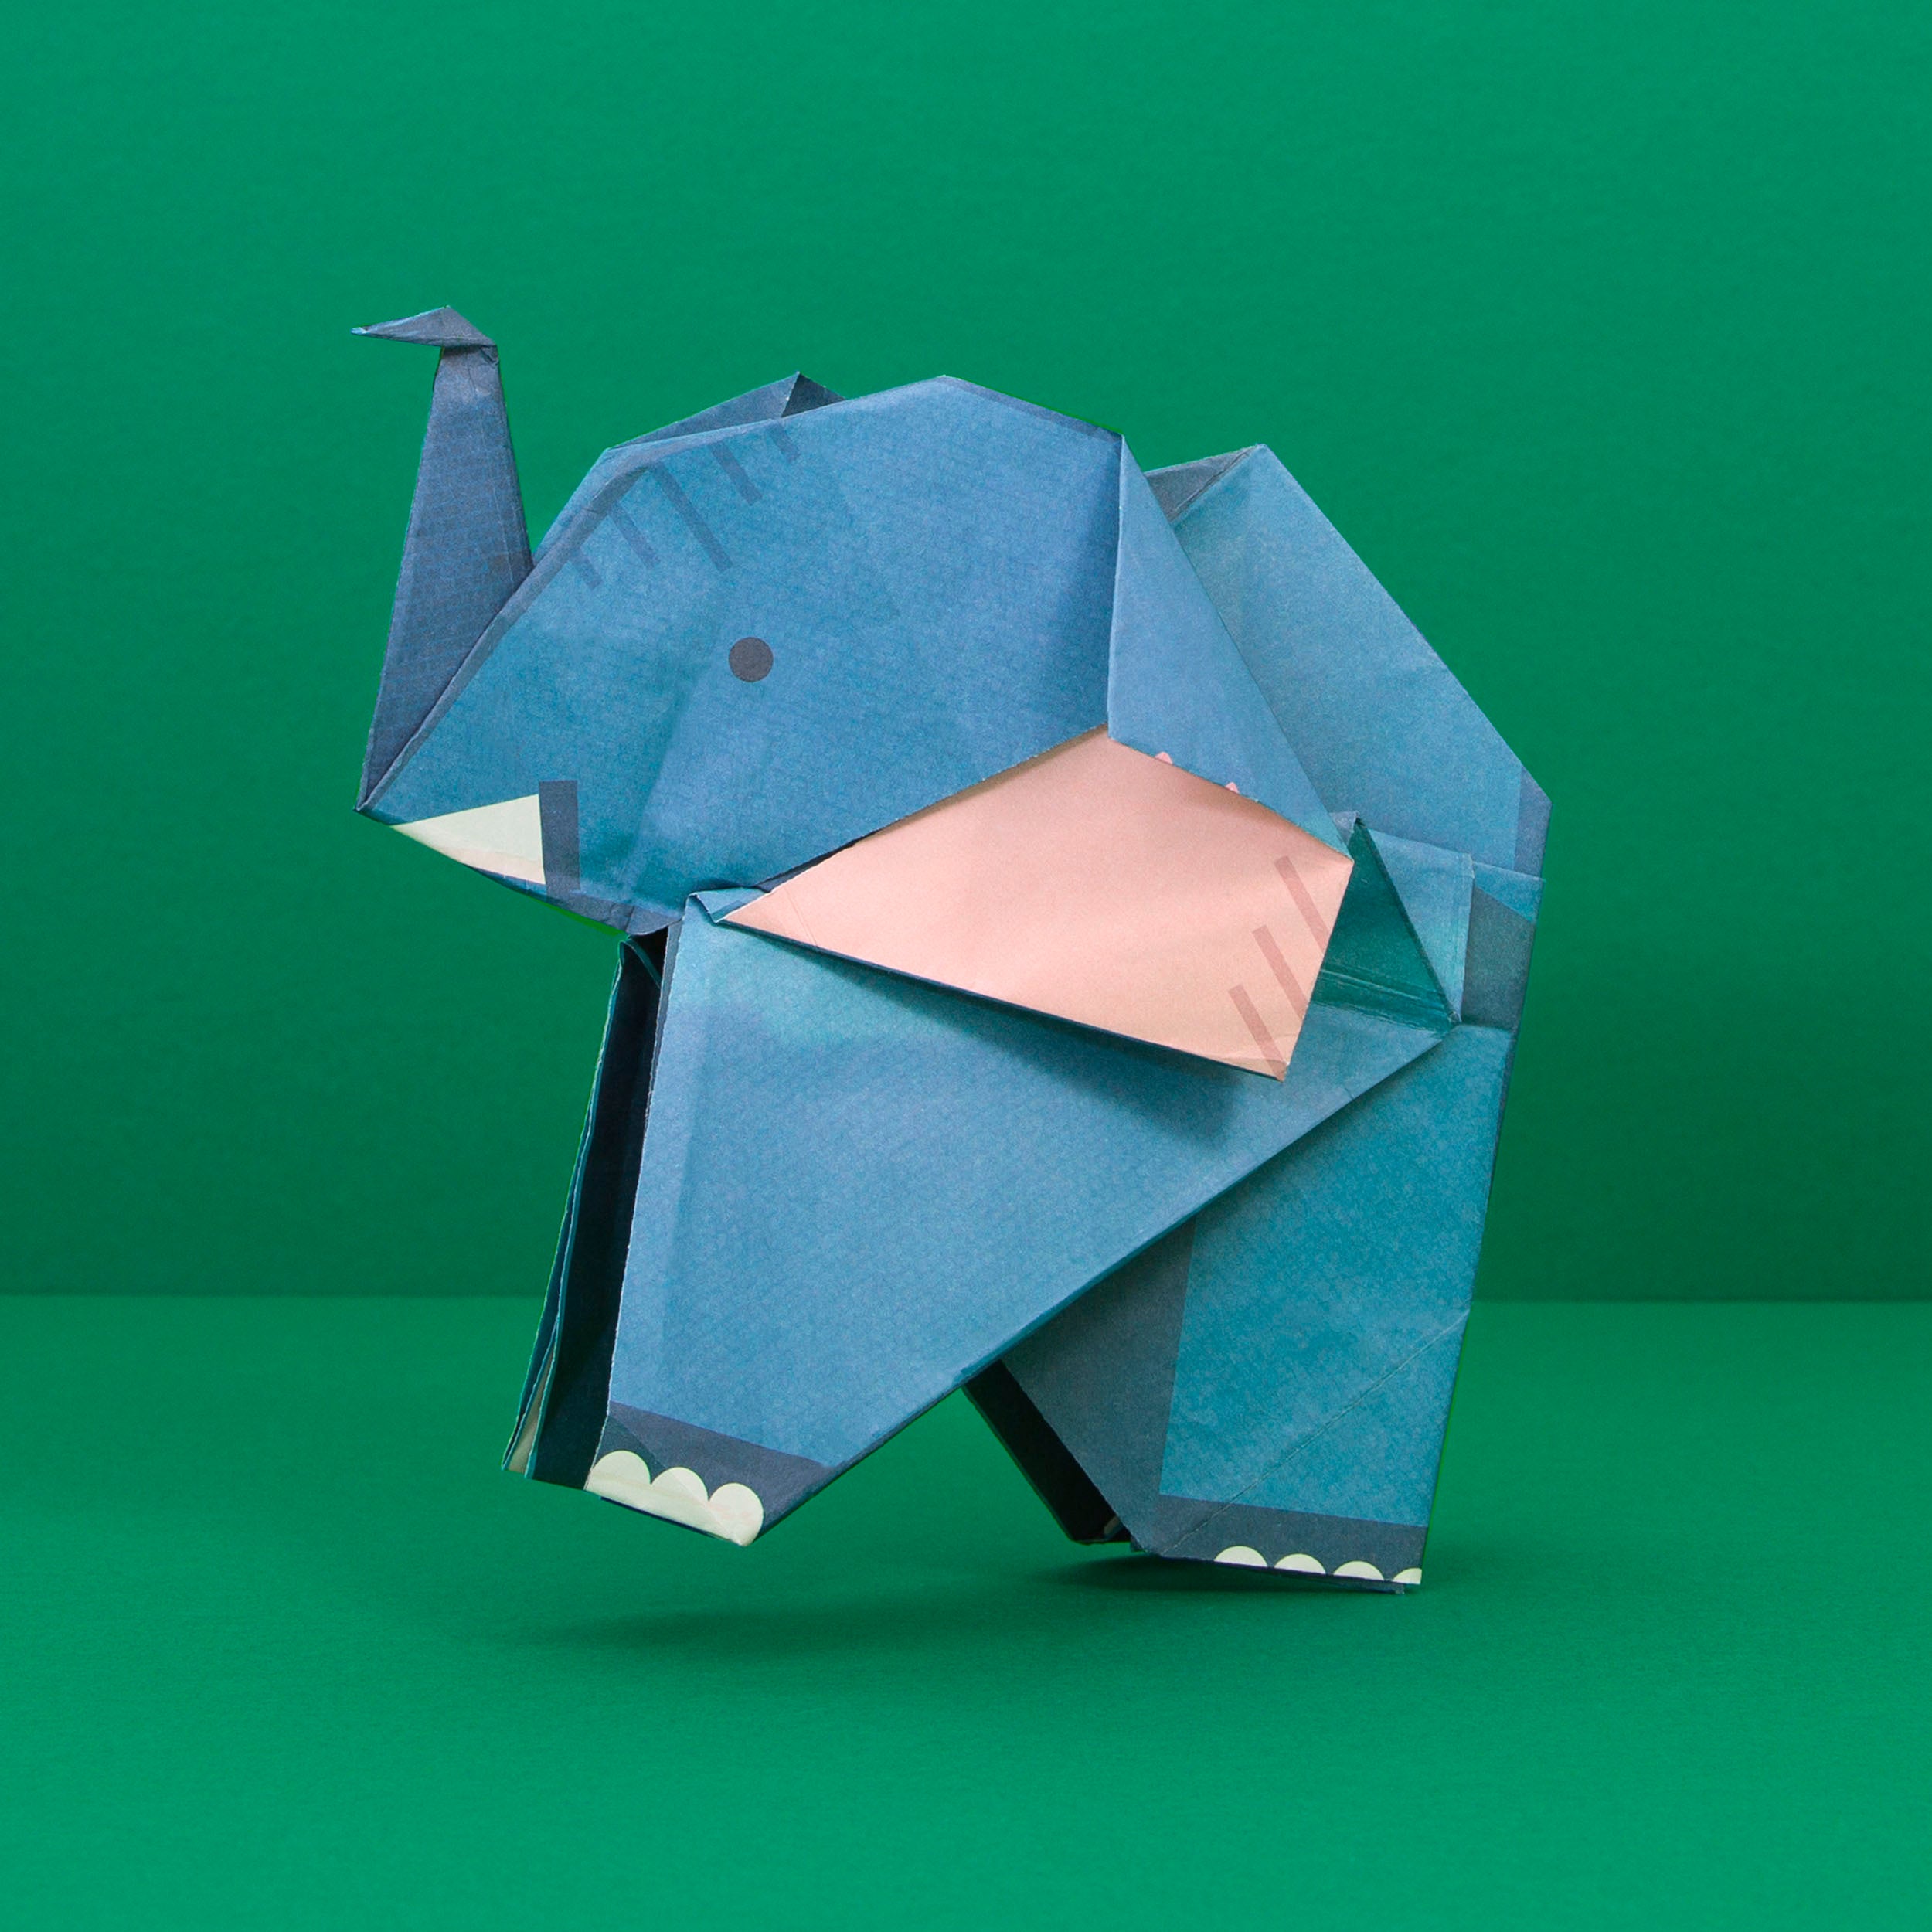 How to Make an Origami Elephant